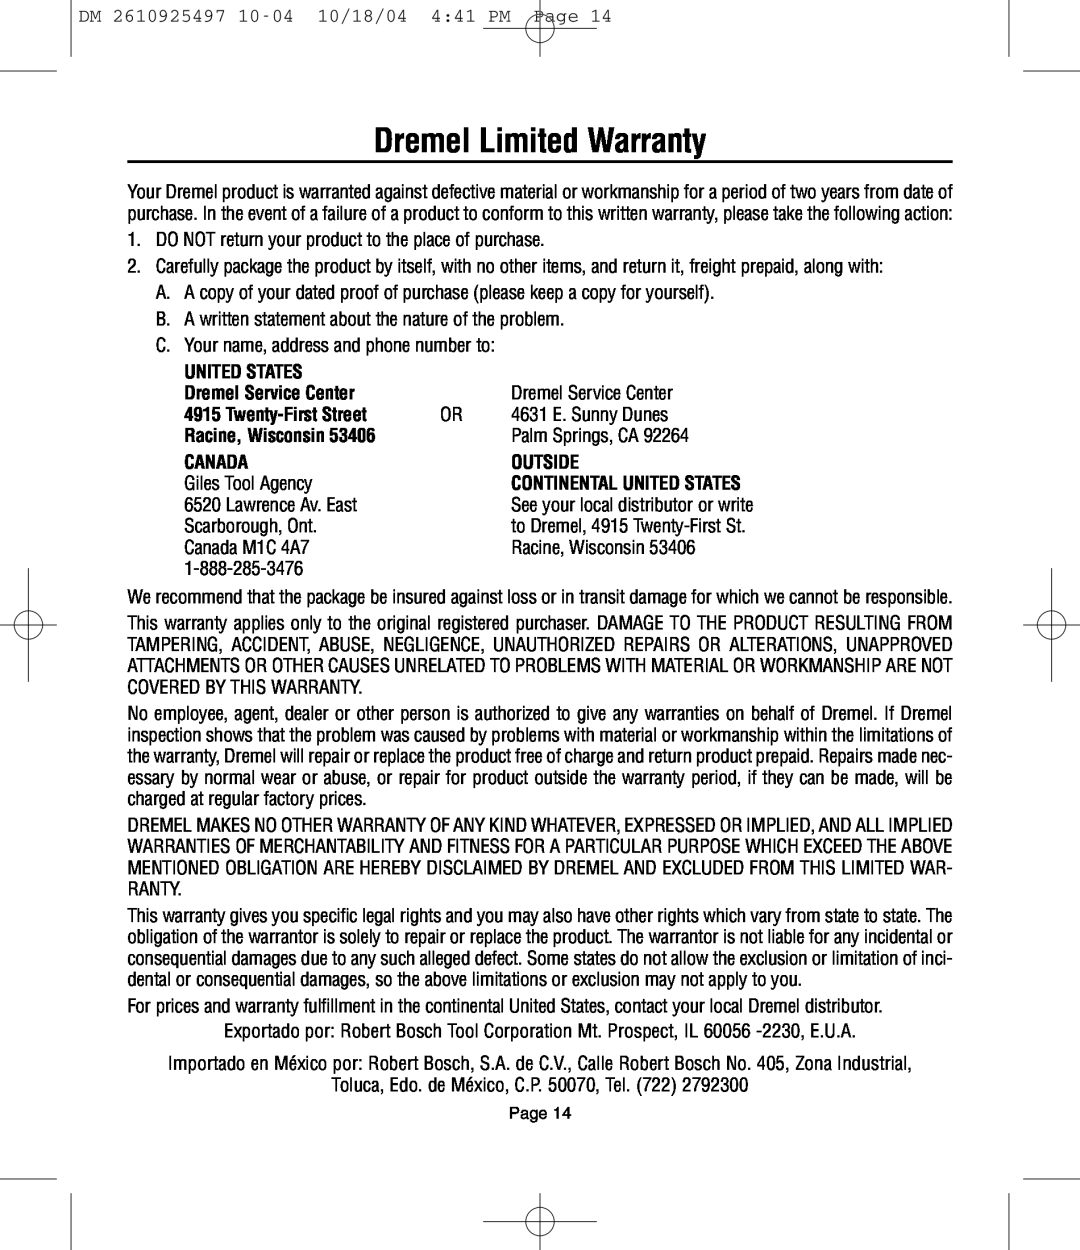 Dremel 764 Dremel Limited Warranty, United States, Dremel Service Center, Twenty-First Street, Racine, Wisconsin, Canada 